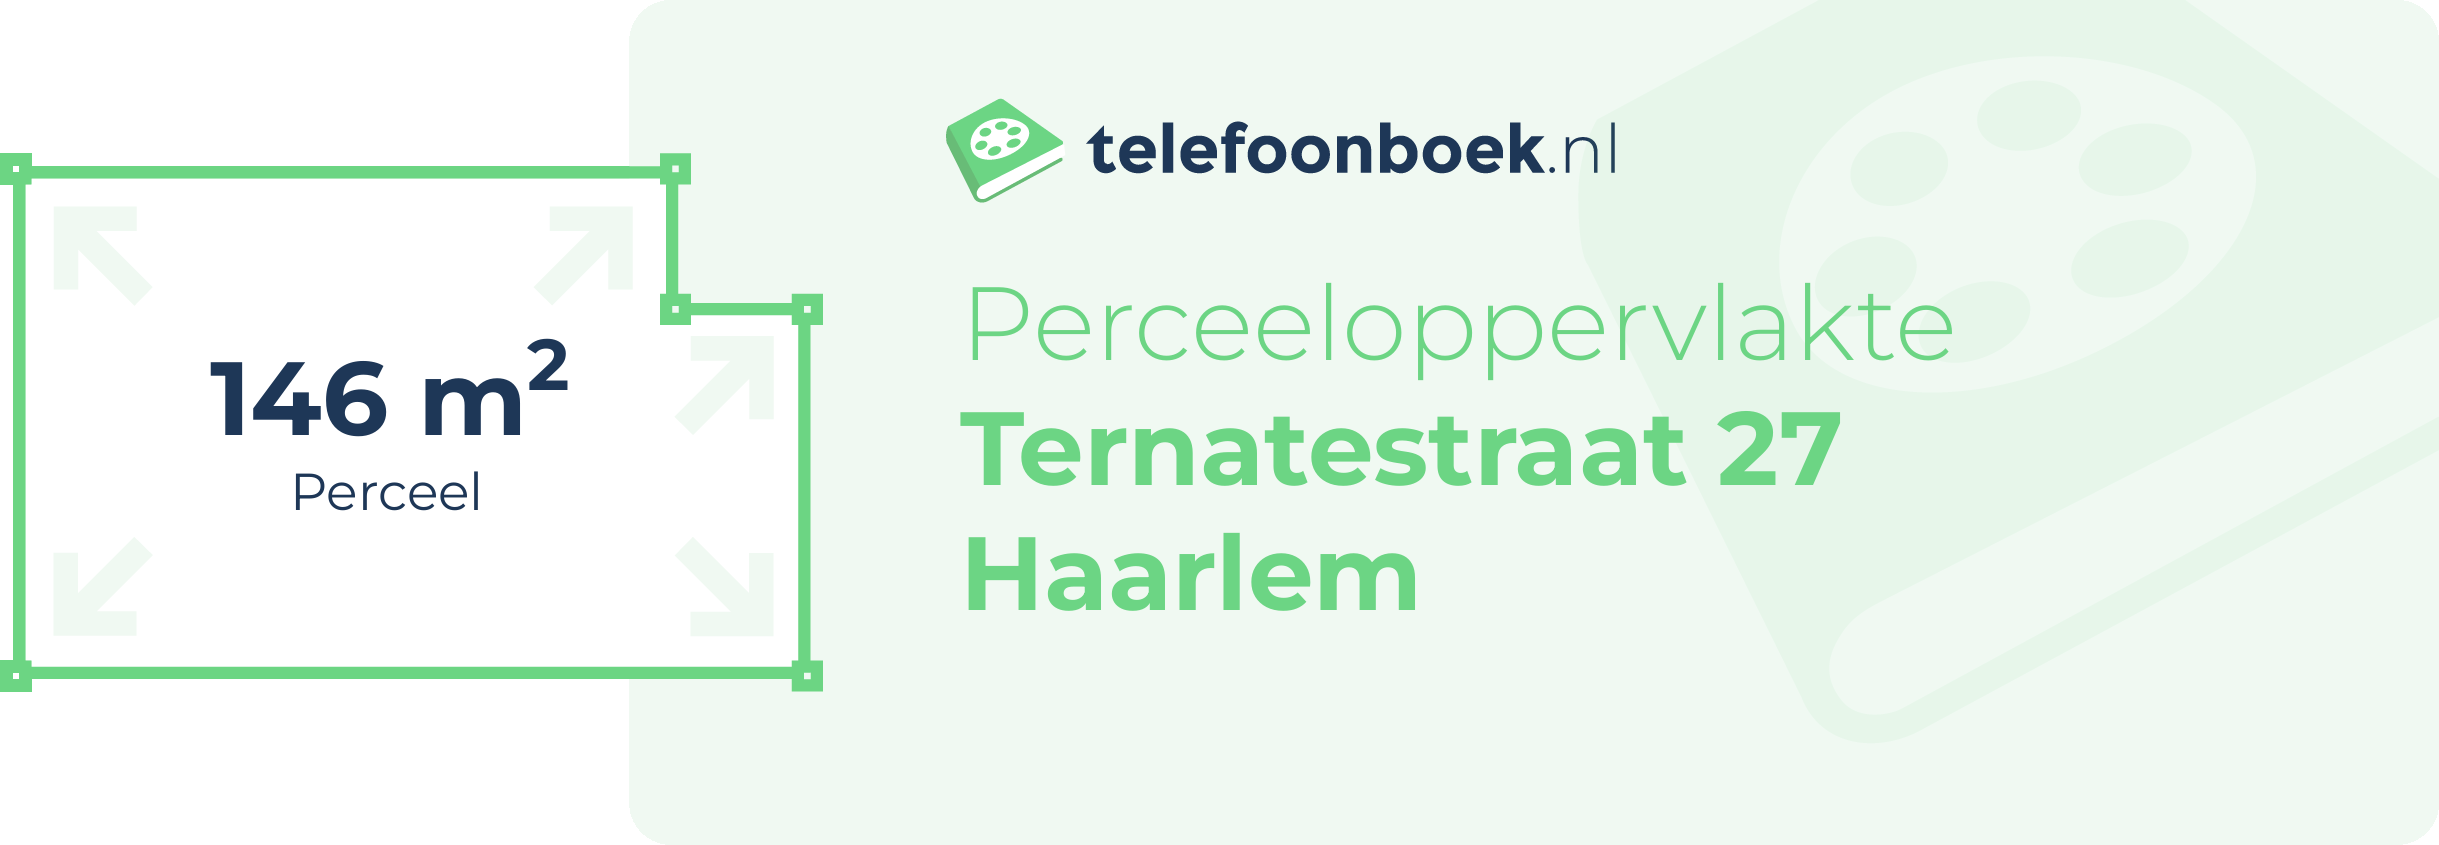 Perceeloppervlakte Ternatestraat 27 Haarlem